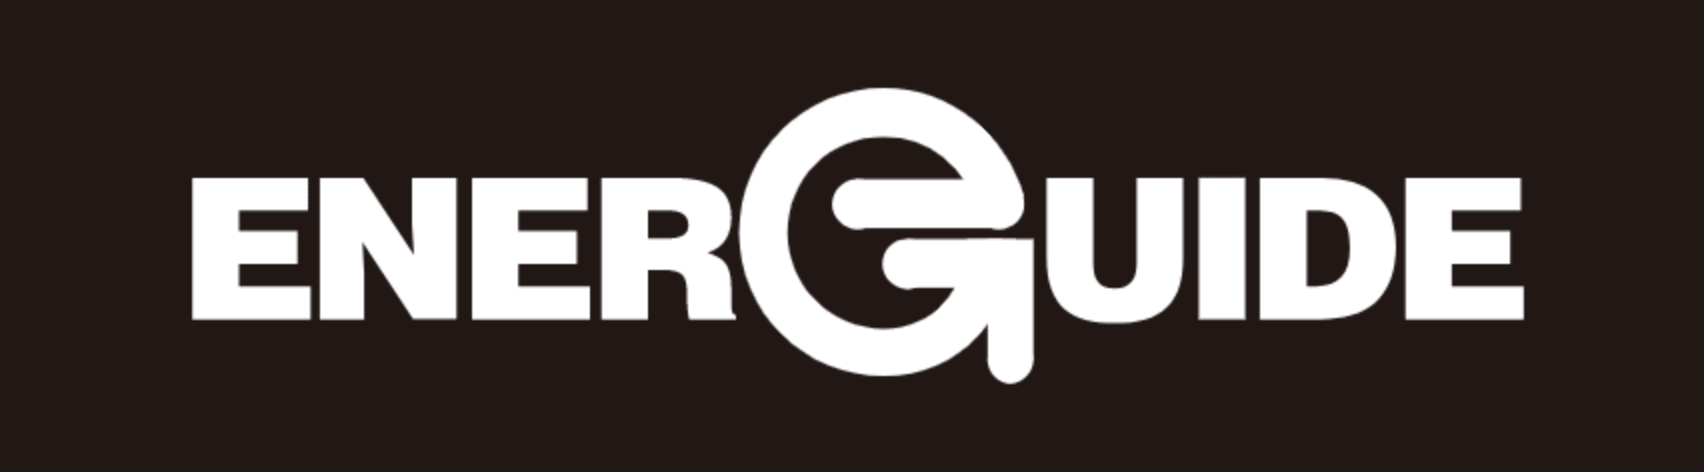 Energuide Logo black and white